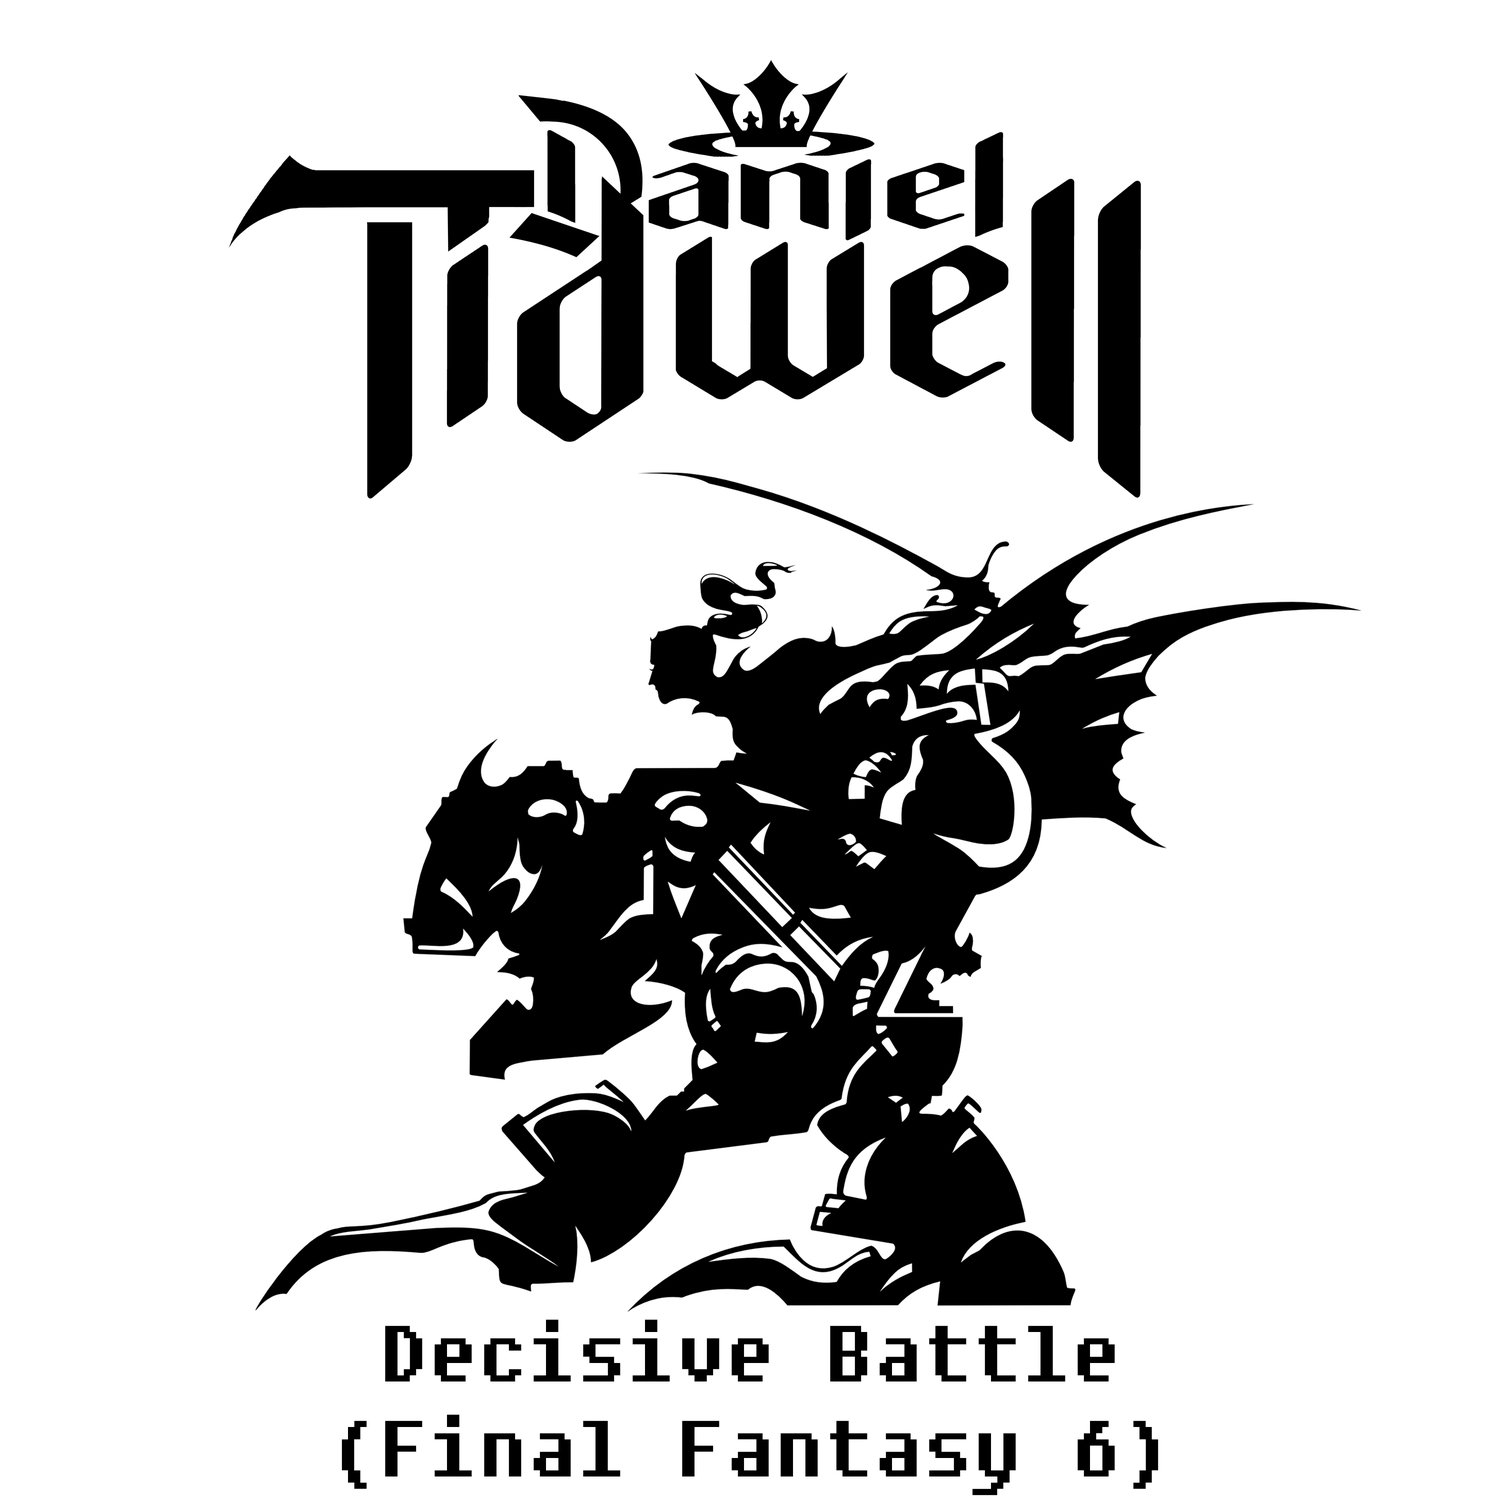 Daniel Tidwell. Symphony Tidwell. Daniel Tidwell Holy orders. Decisive battle